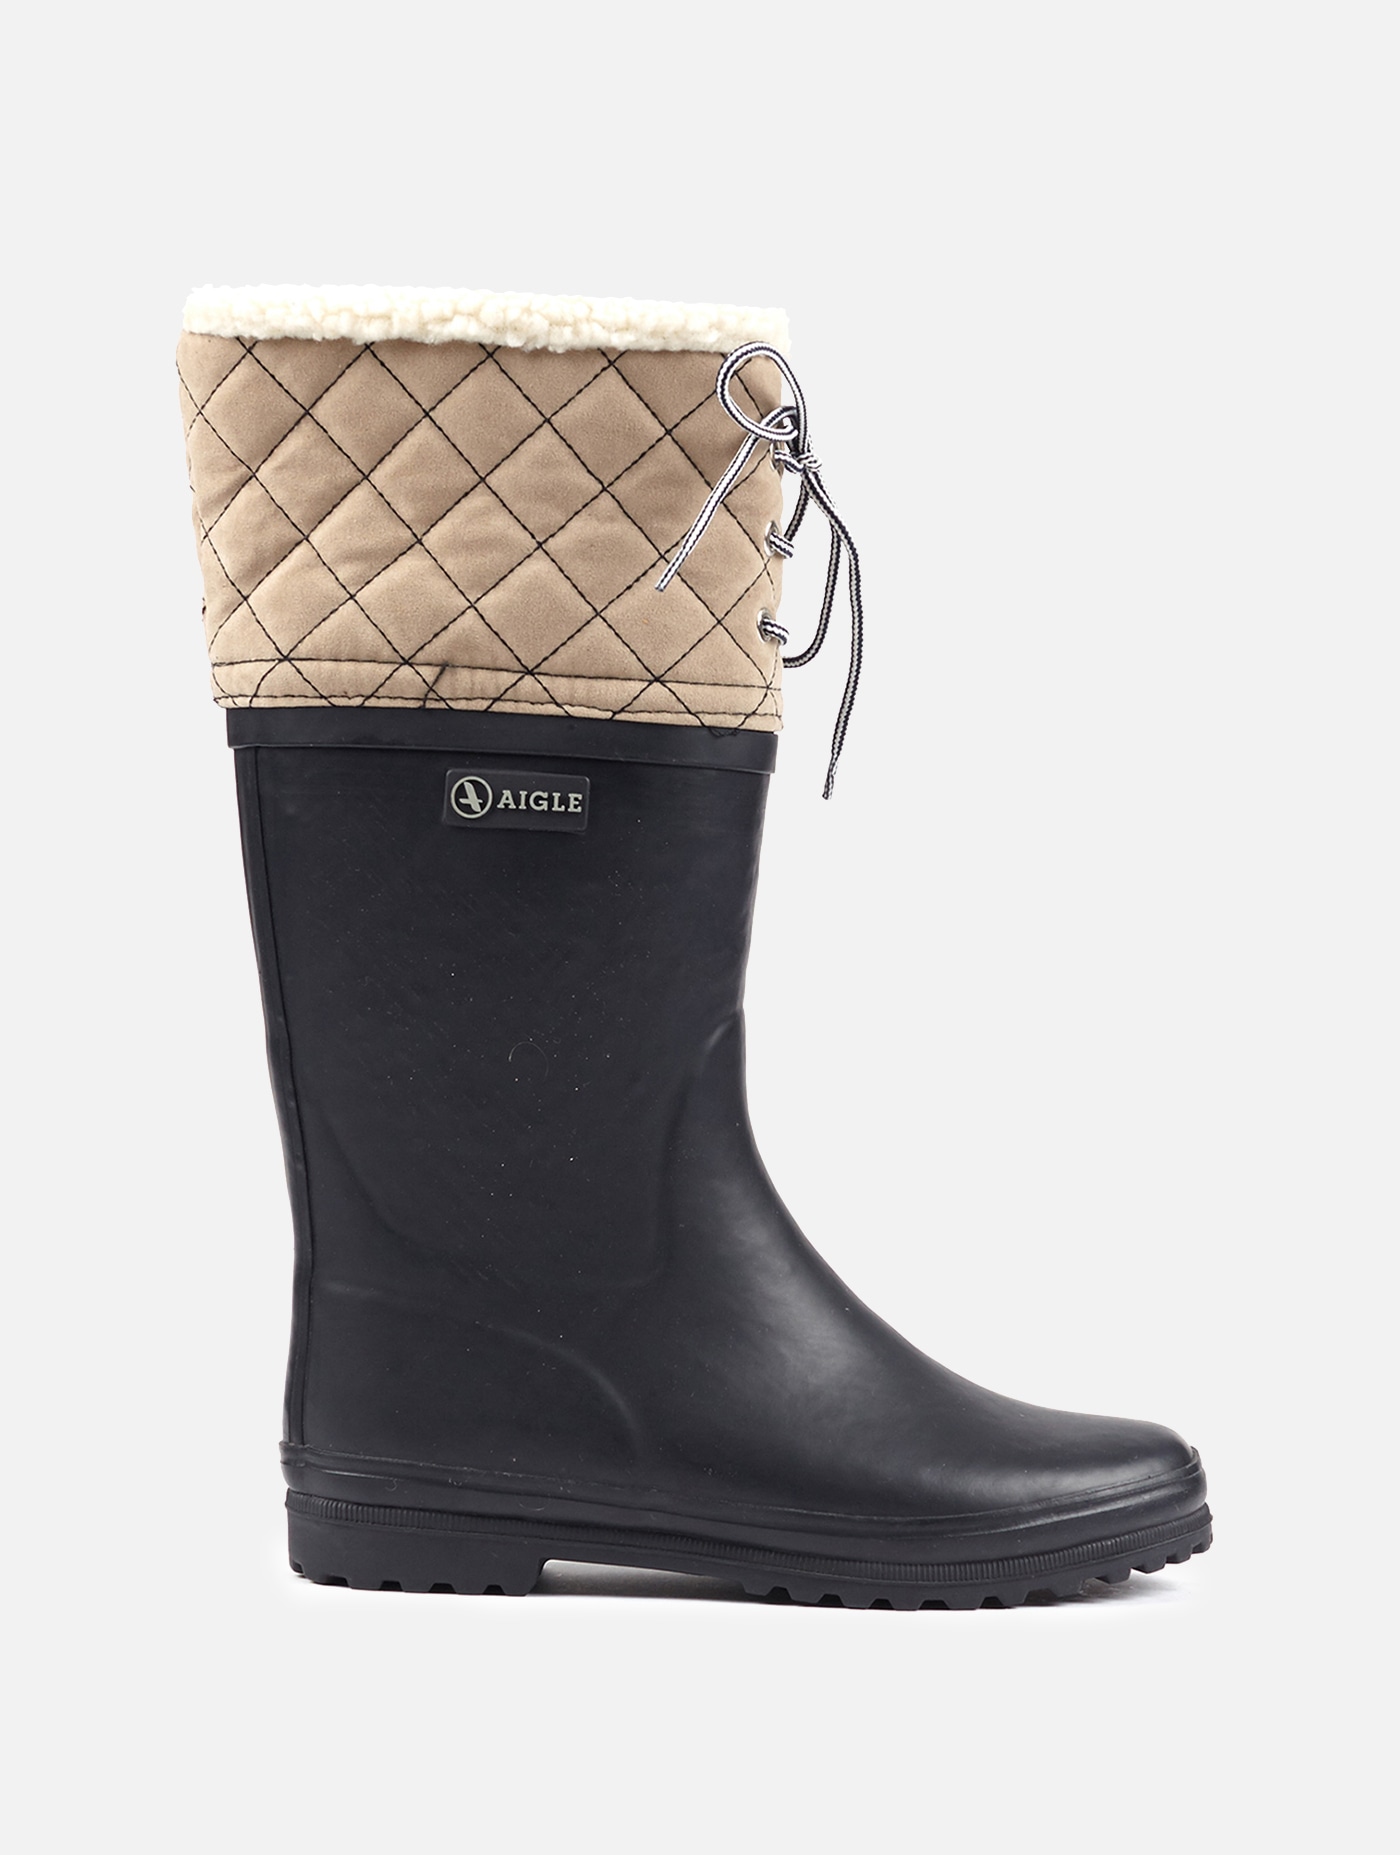 januar skrivestil neutral Aigle - The fur-lined boot, ideal for cold weather Marine/beige - Polka  giboulee | AIGLE